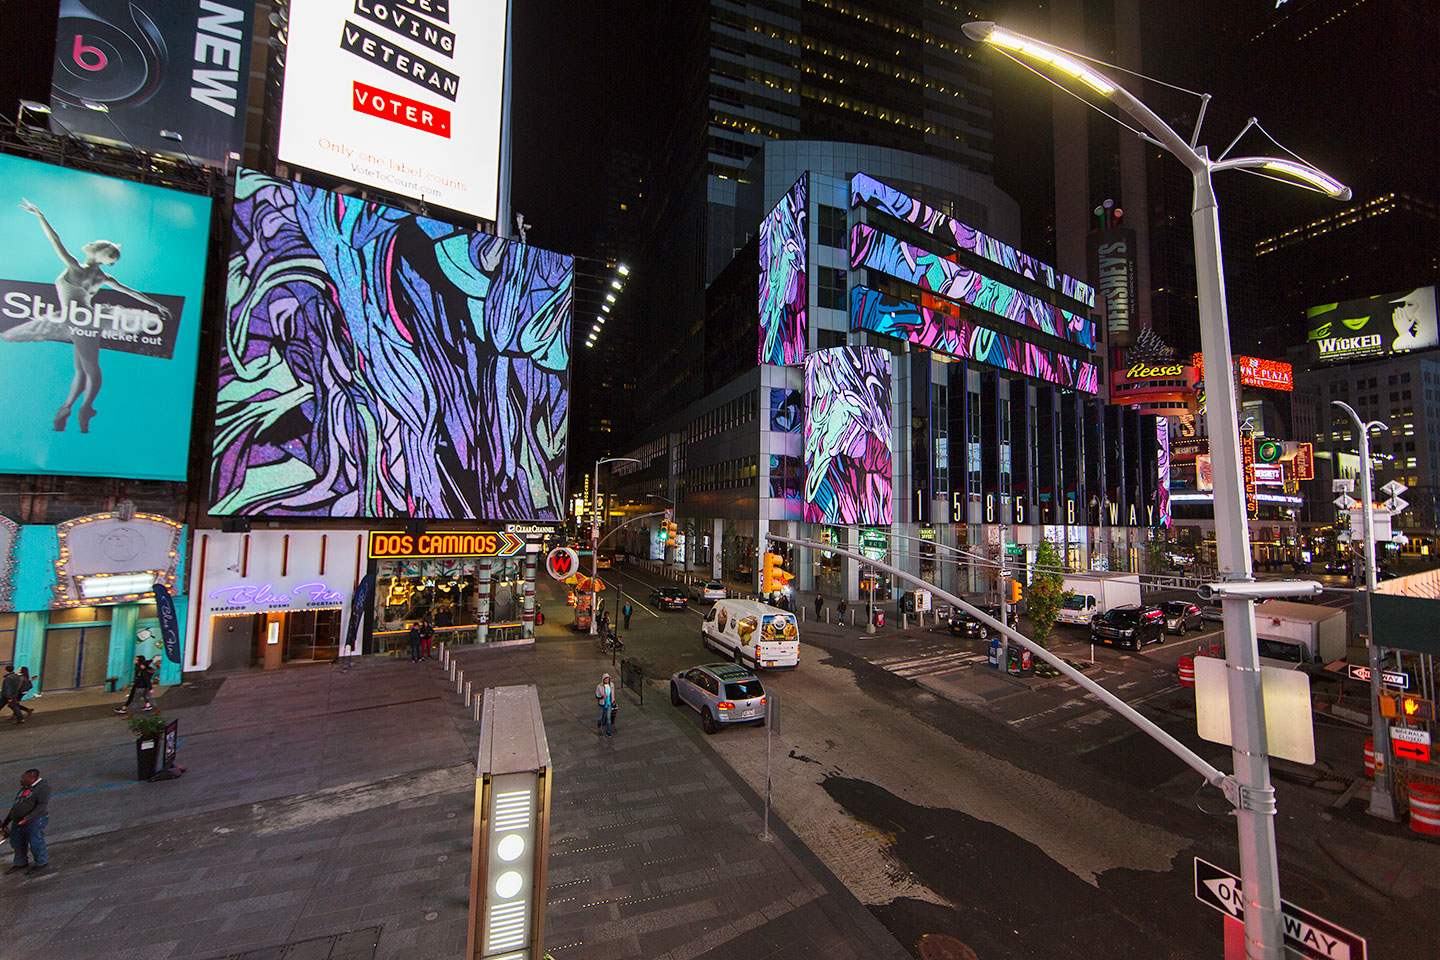   Dream Season, 2016   Times Square, NYC  Photo by Ka-man Tse 